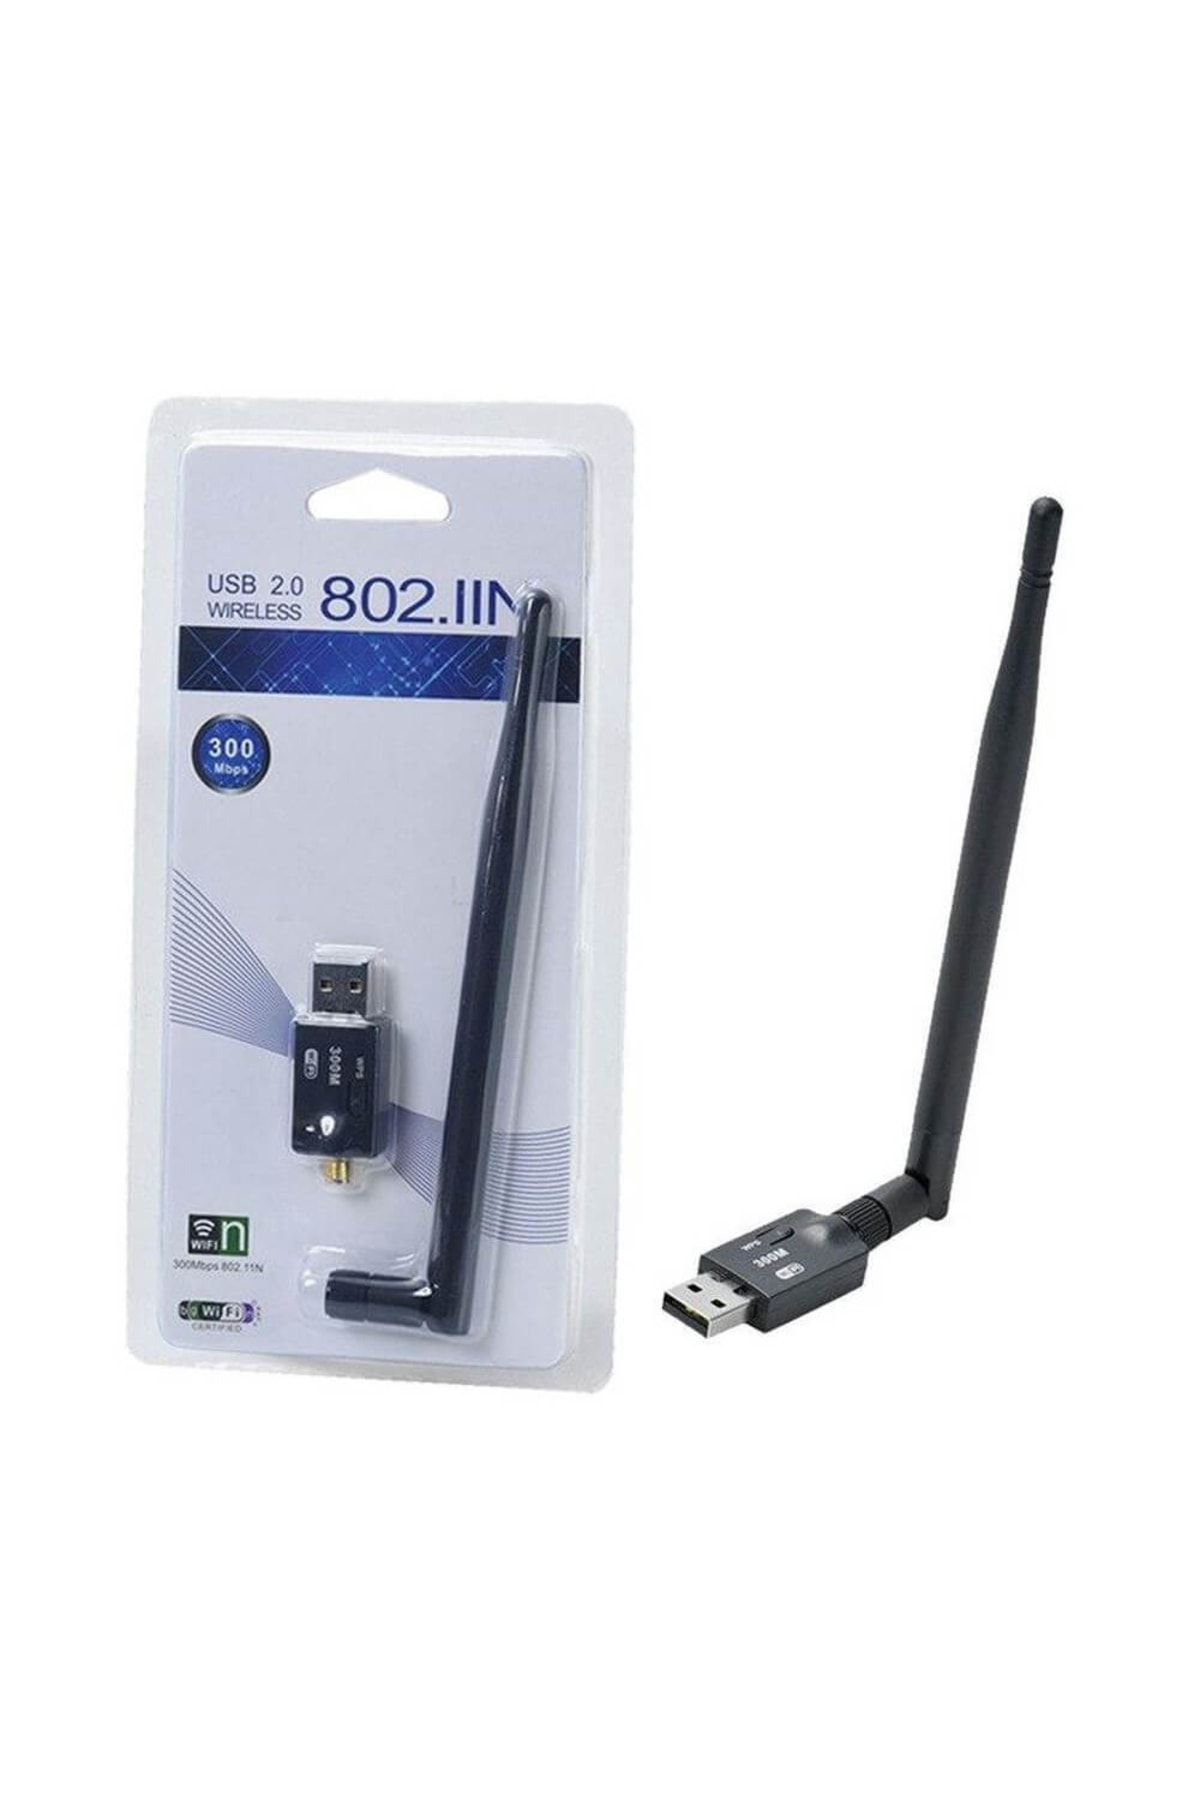 Wireless wifi usb adapter. WIFI адаптер Wireless lan USB 802.11 N. Адаптер Wi-Fi USB 300. Адаптер беспроводной сети адаптер беспроводной сети 802.11 WLAN. Ralink 802.11n USB Wireless lan Card.